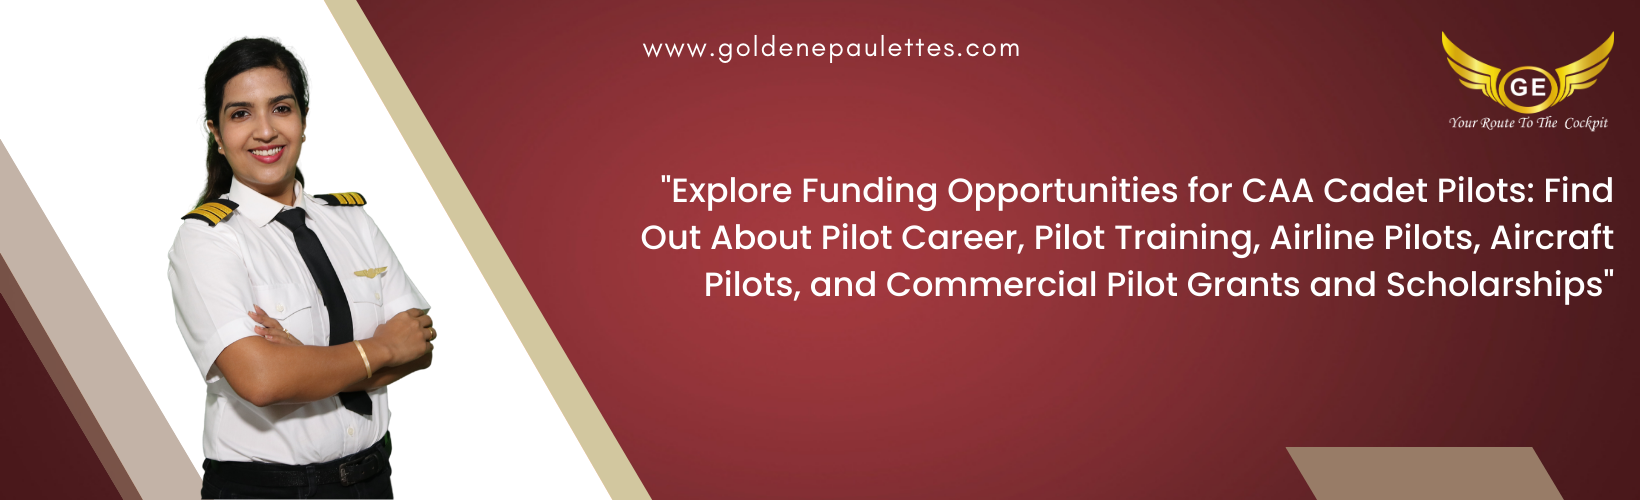 Funding Opportunities for CAA Cadet Pilots